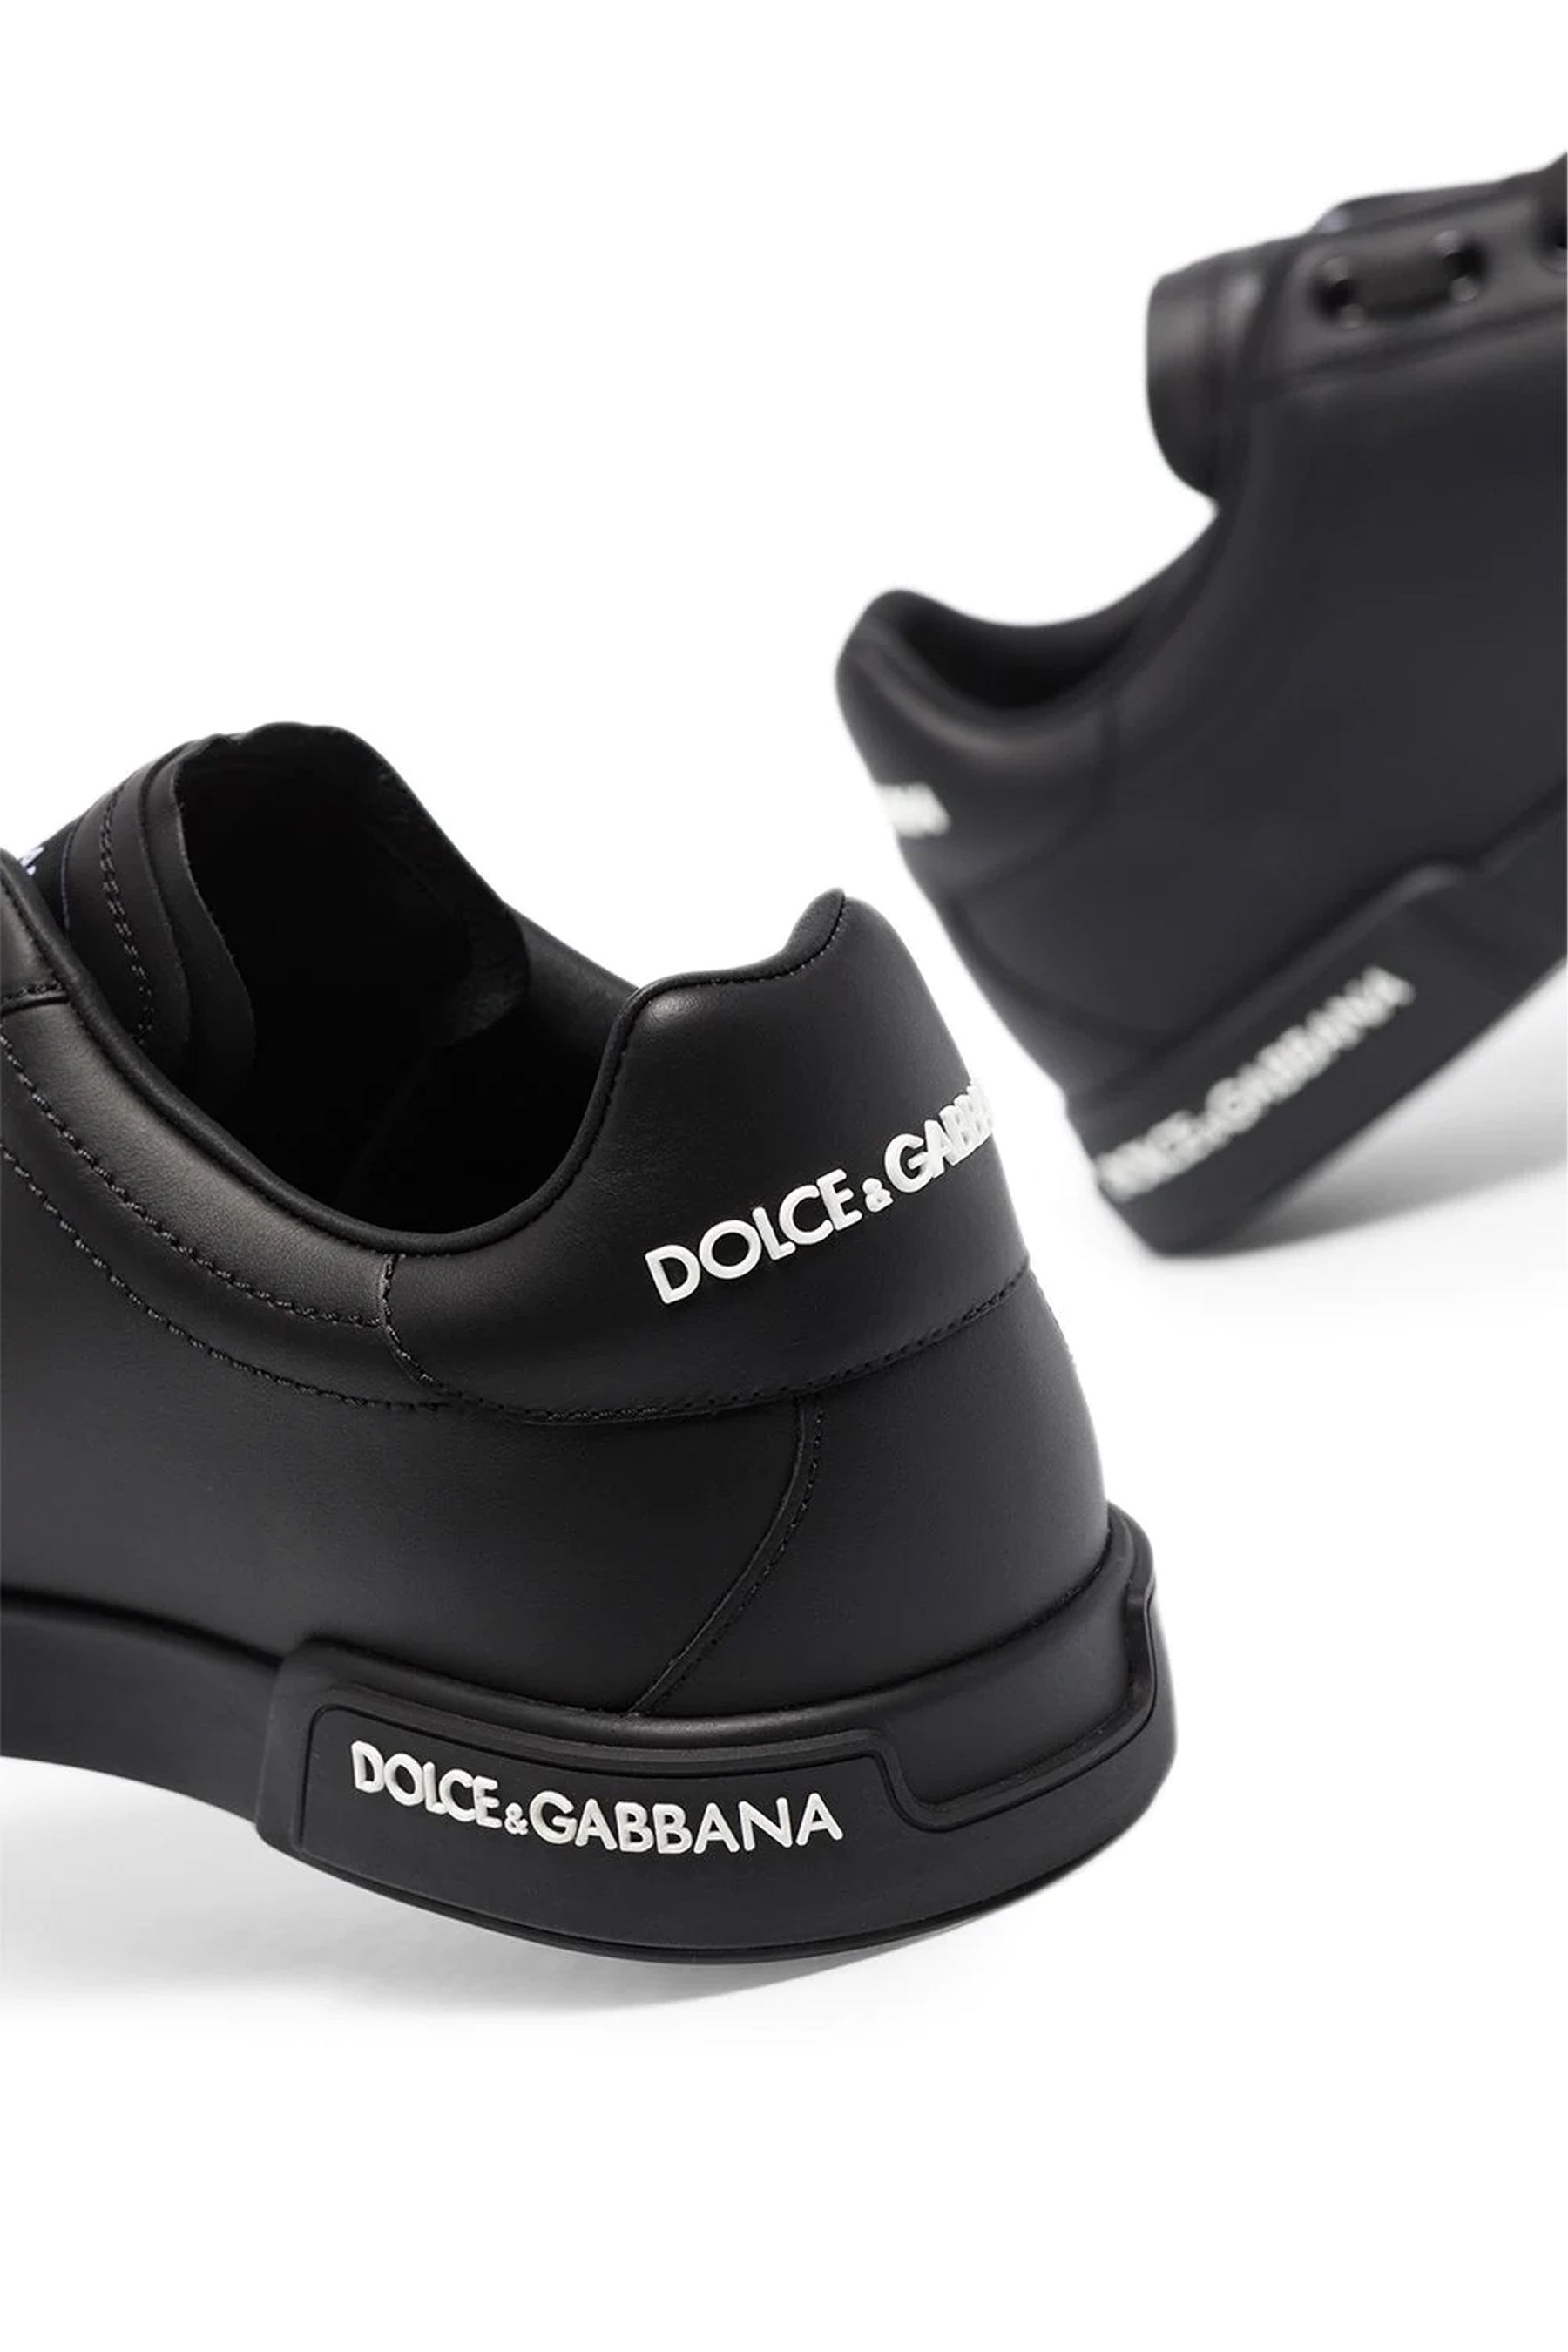 Dolce & Gabbana Portofino logo-detail sneakers black